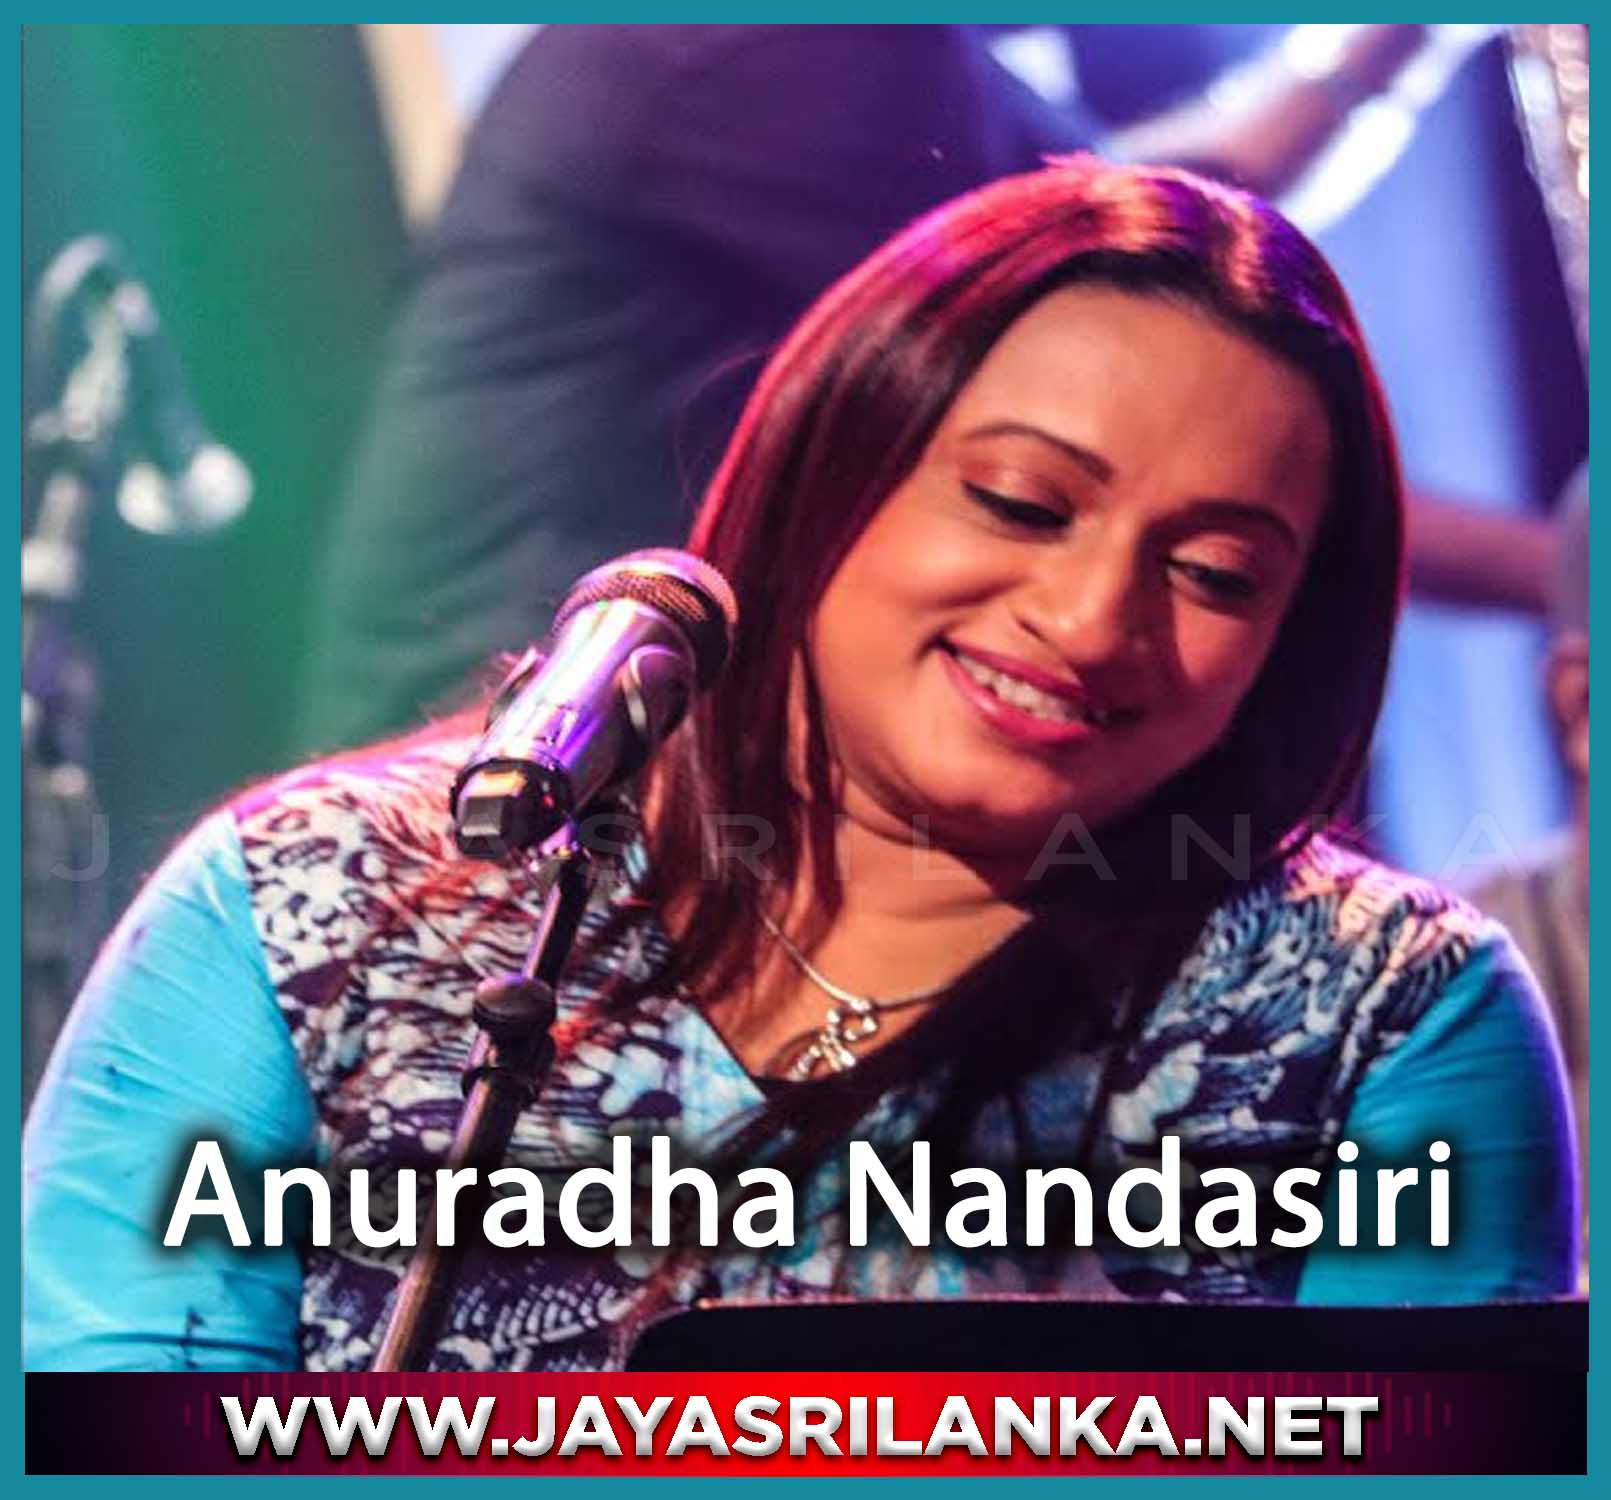 Duka Hithena Welawaka - Anuradha Nandasiri mp3 Image